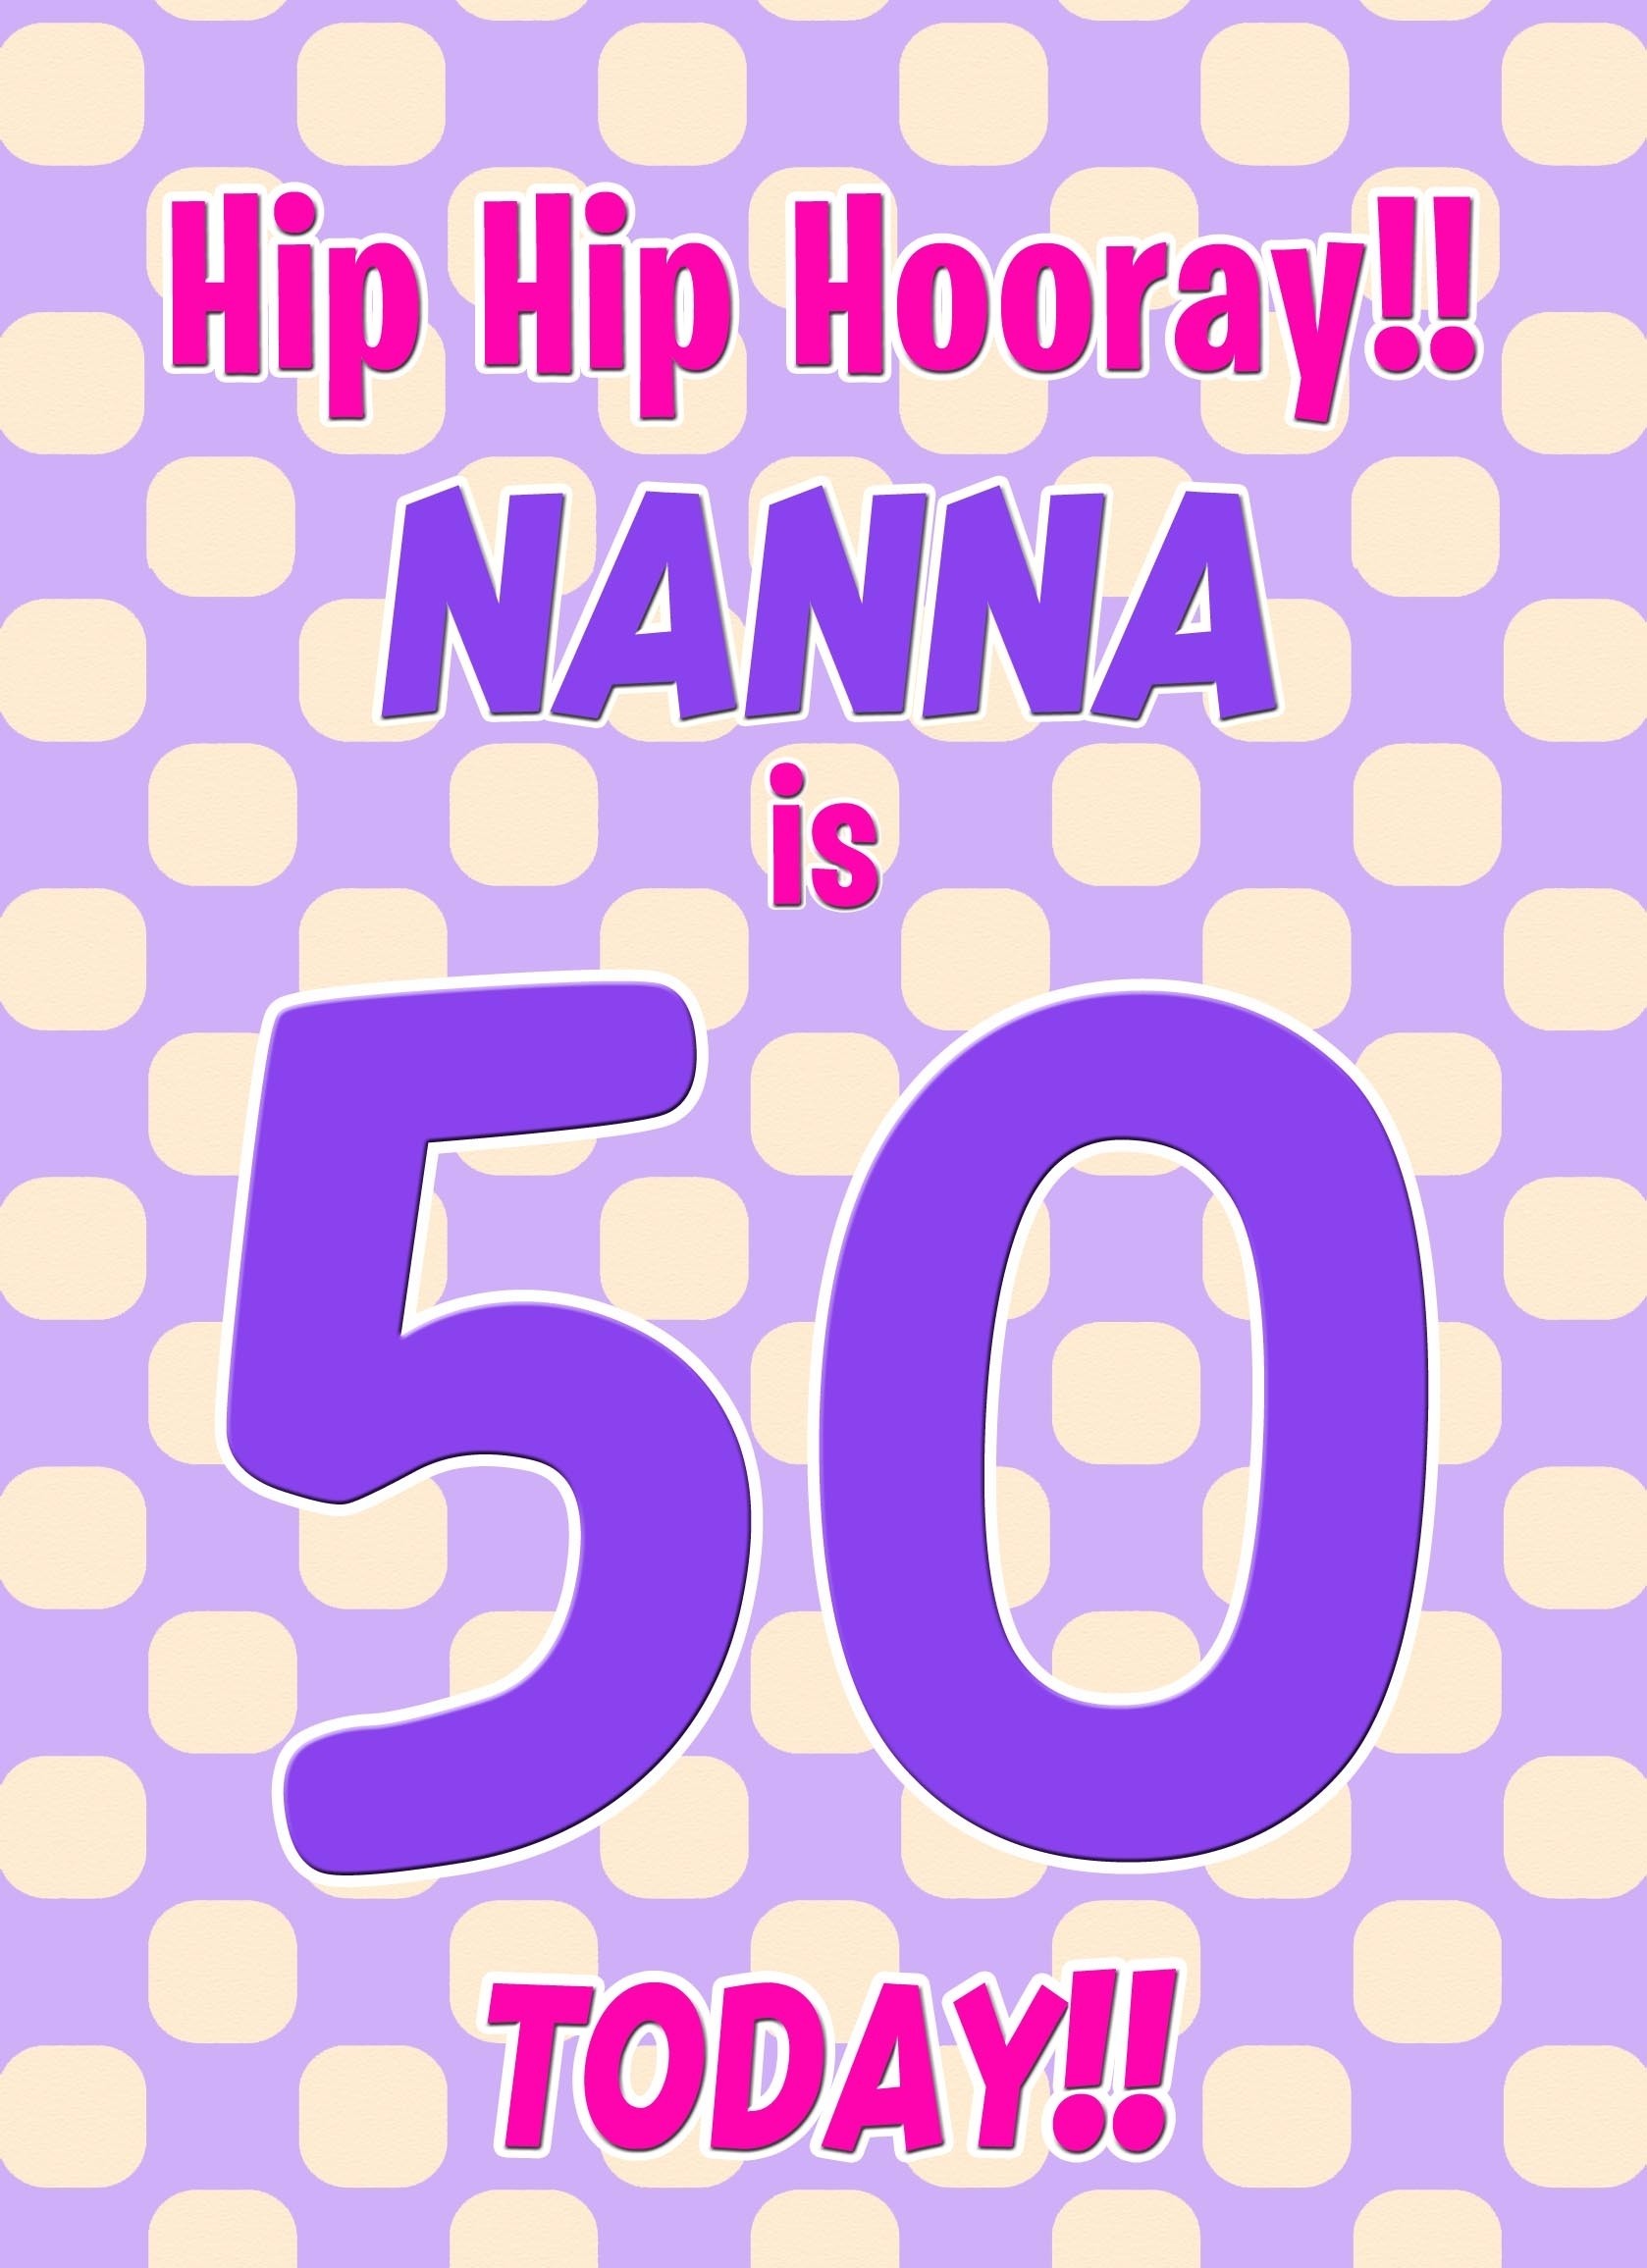 Nanna 50th Birthday Card (Purple Spots)